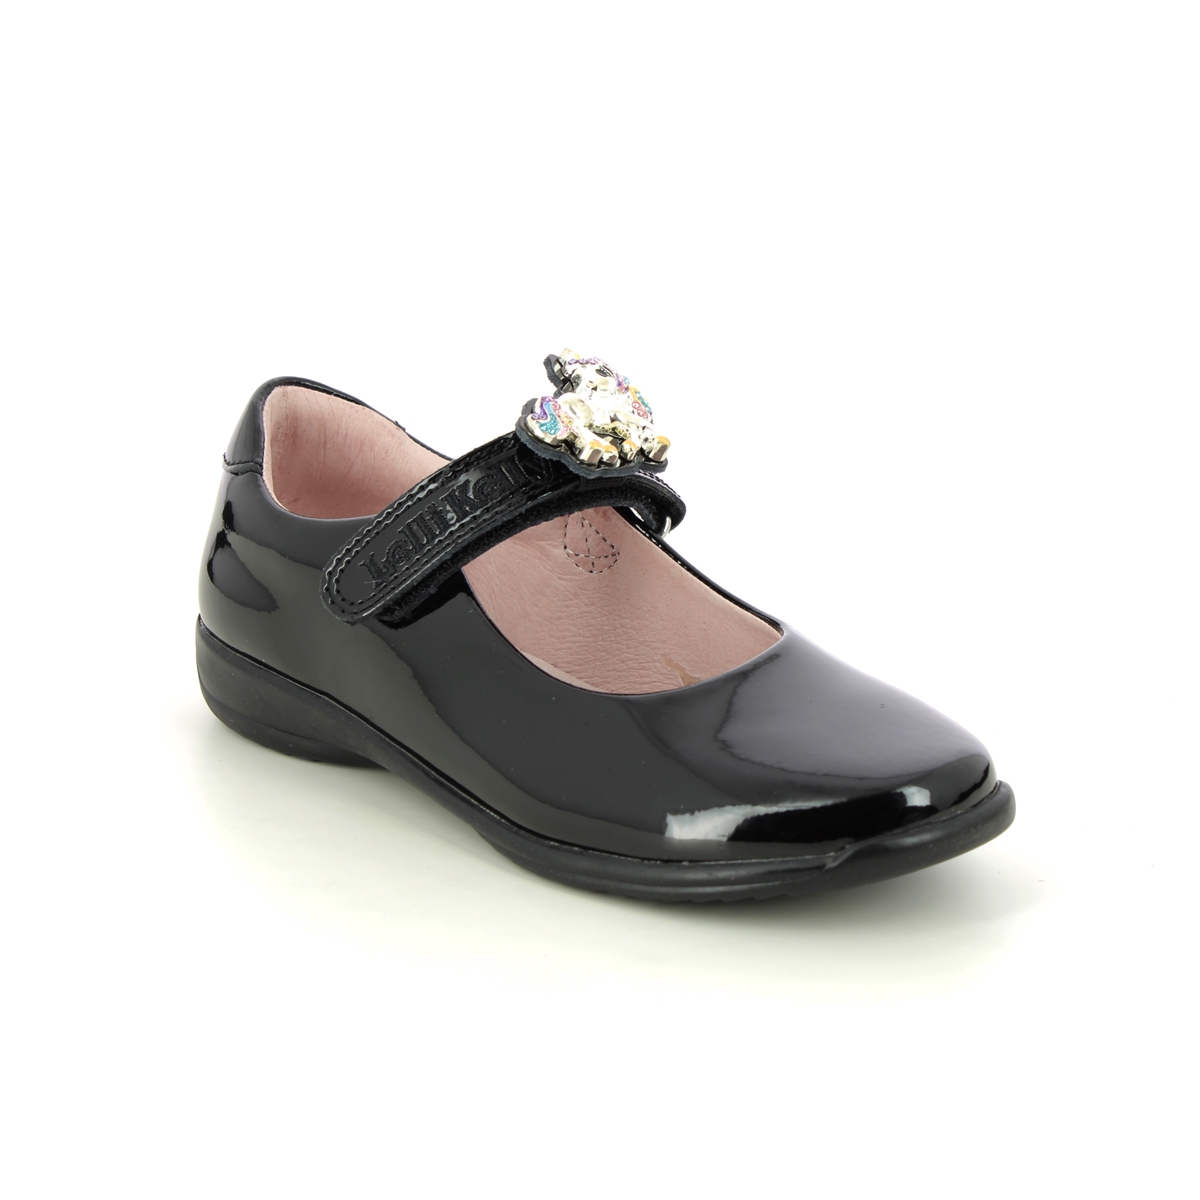 Lelli Kelly Bella Unicorn F Black patent Kids Girls shoes LK8113-DB01 in a Plain Leather in Size 35